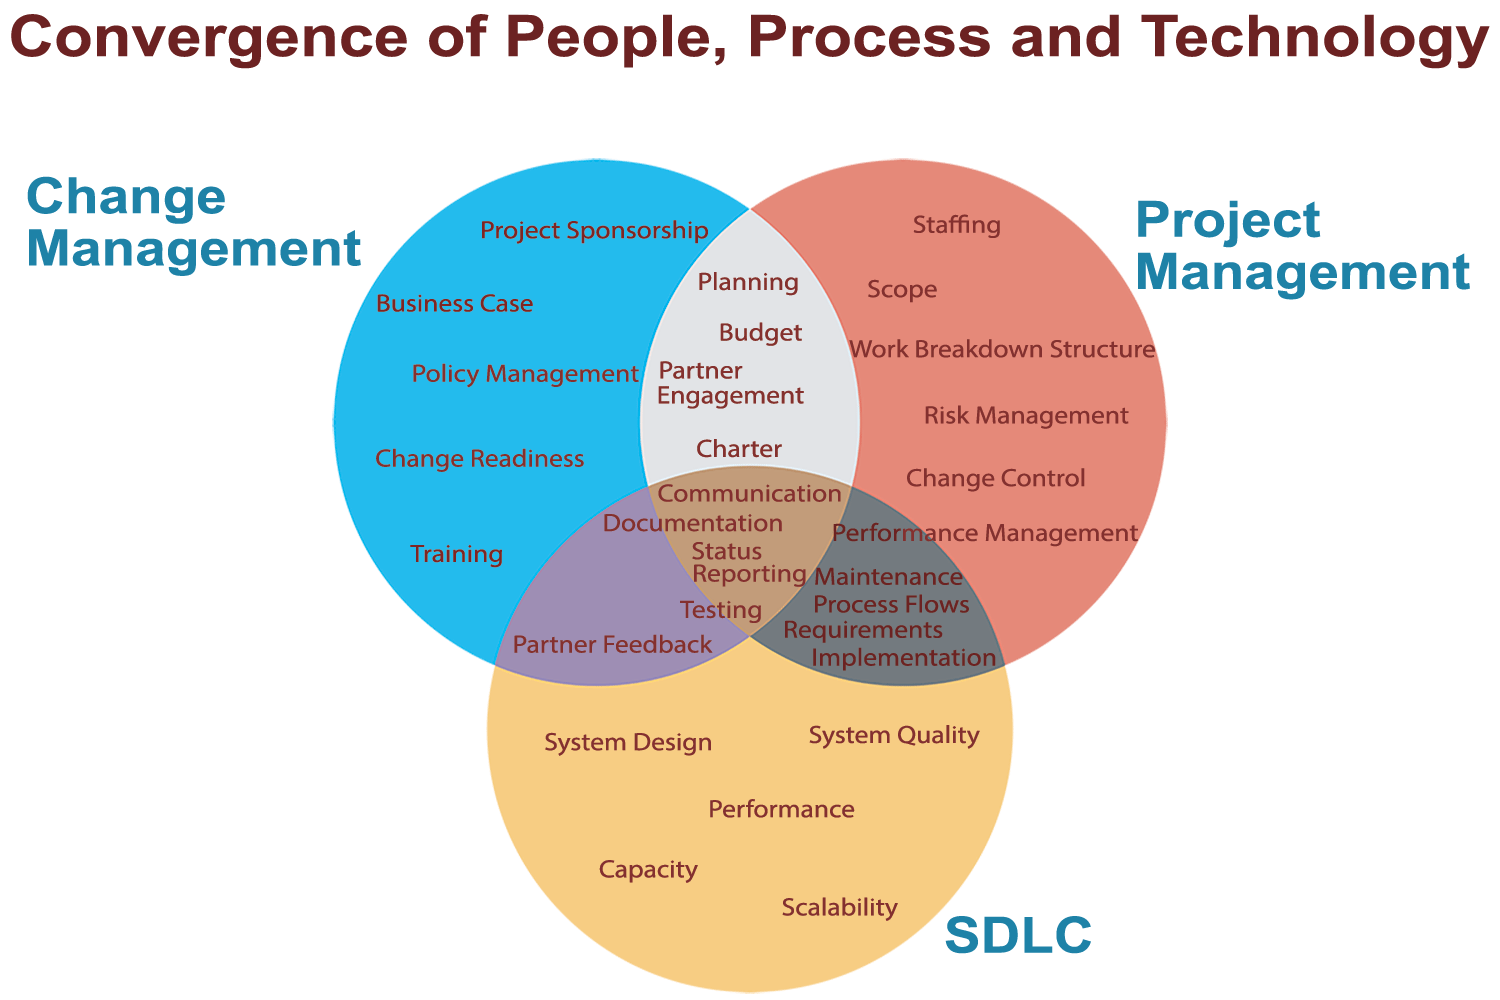 SDLC: It’s Not Just About Technology